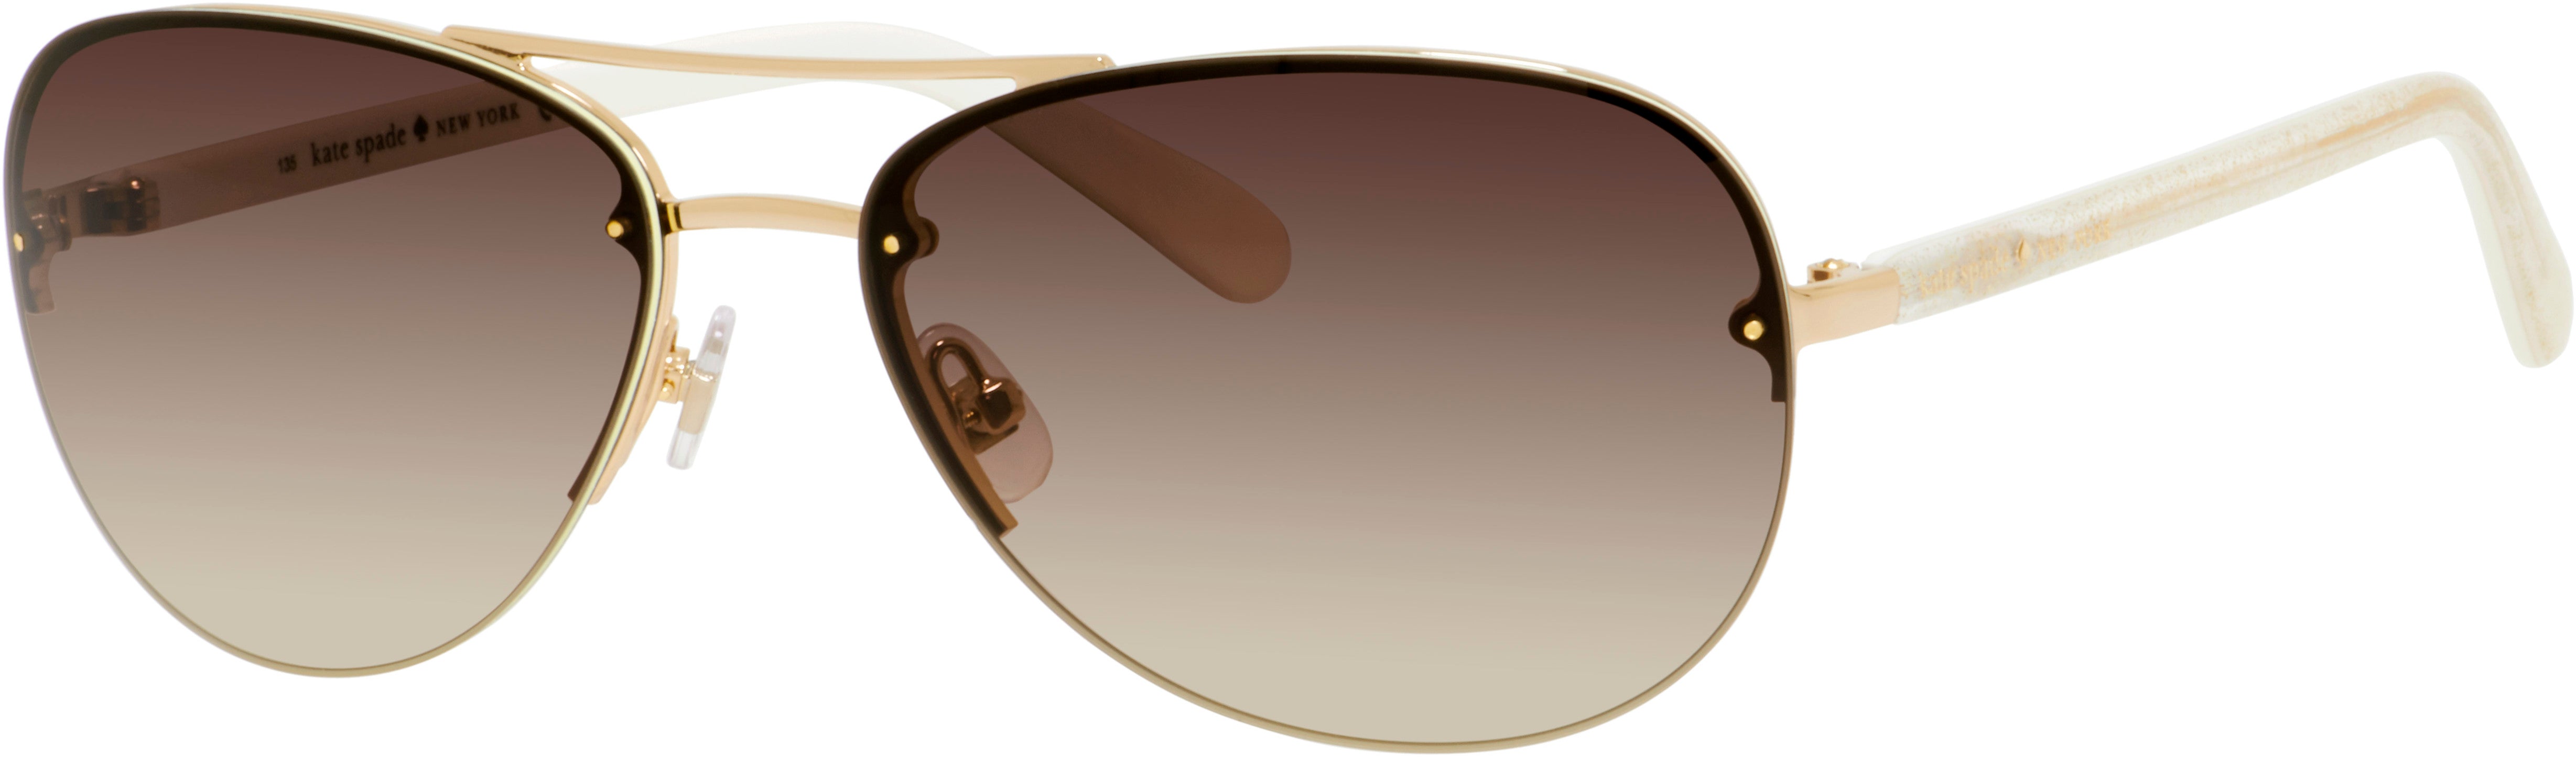 Kate Spade Beryl/S Aviator Sunglasses 0AU2-0AU2  Rose Gold (Y6 Brown Gradient)